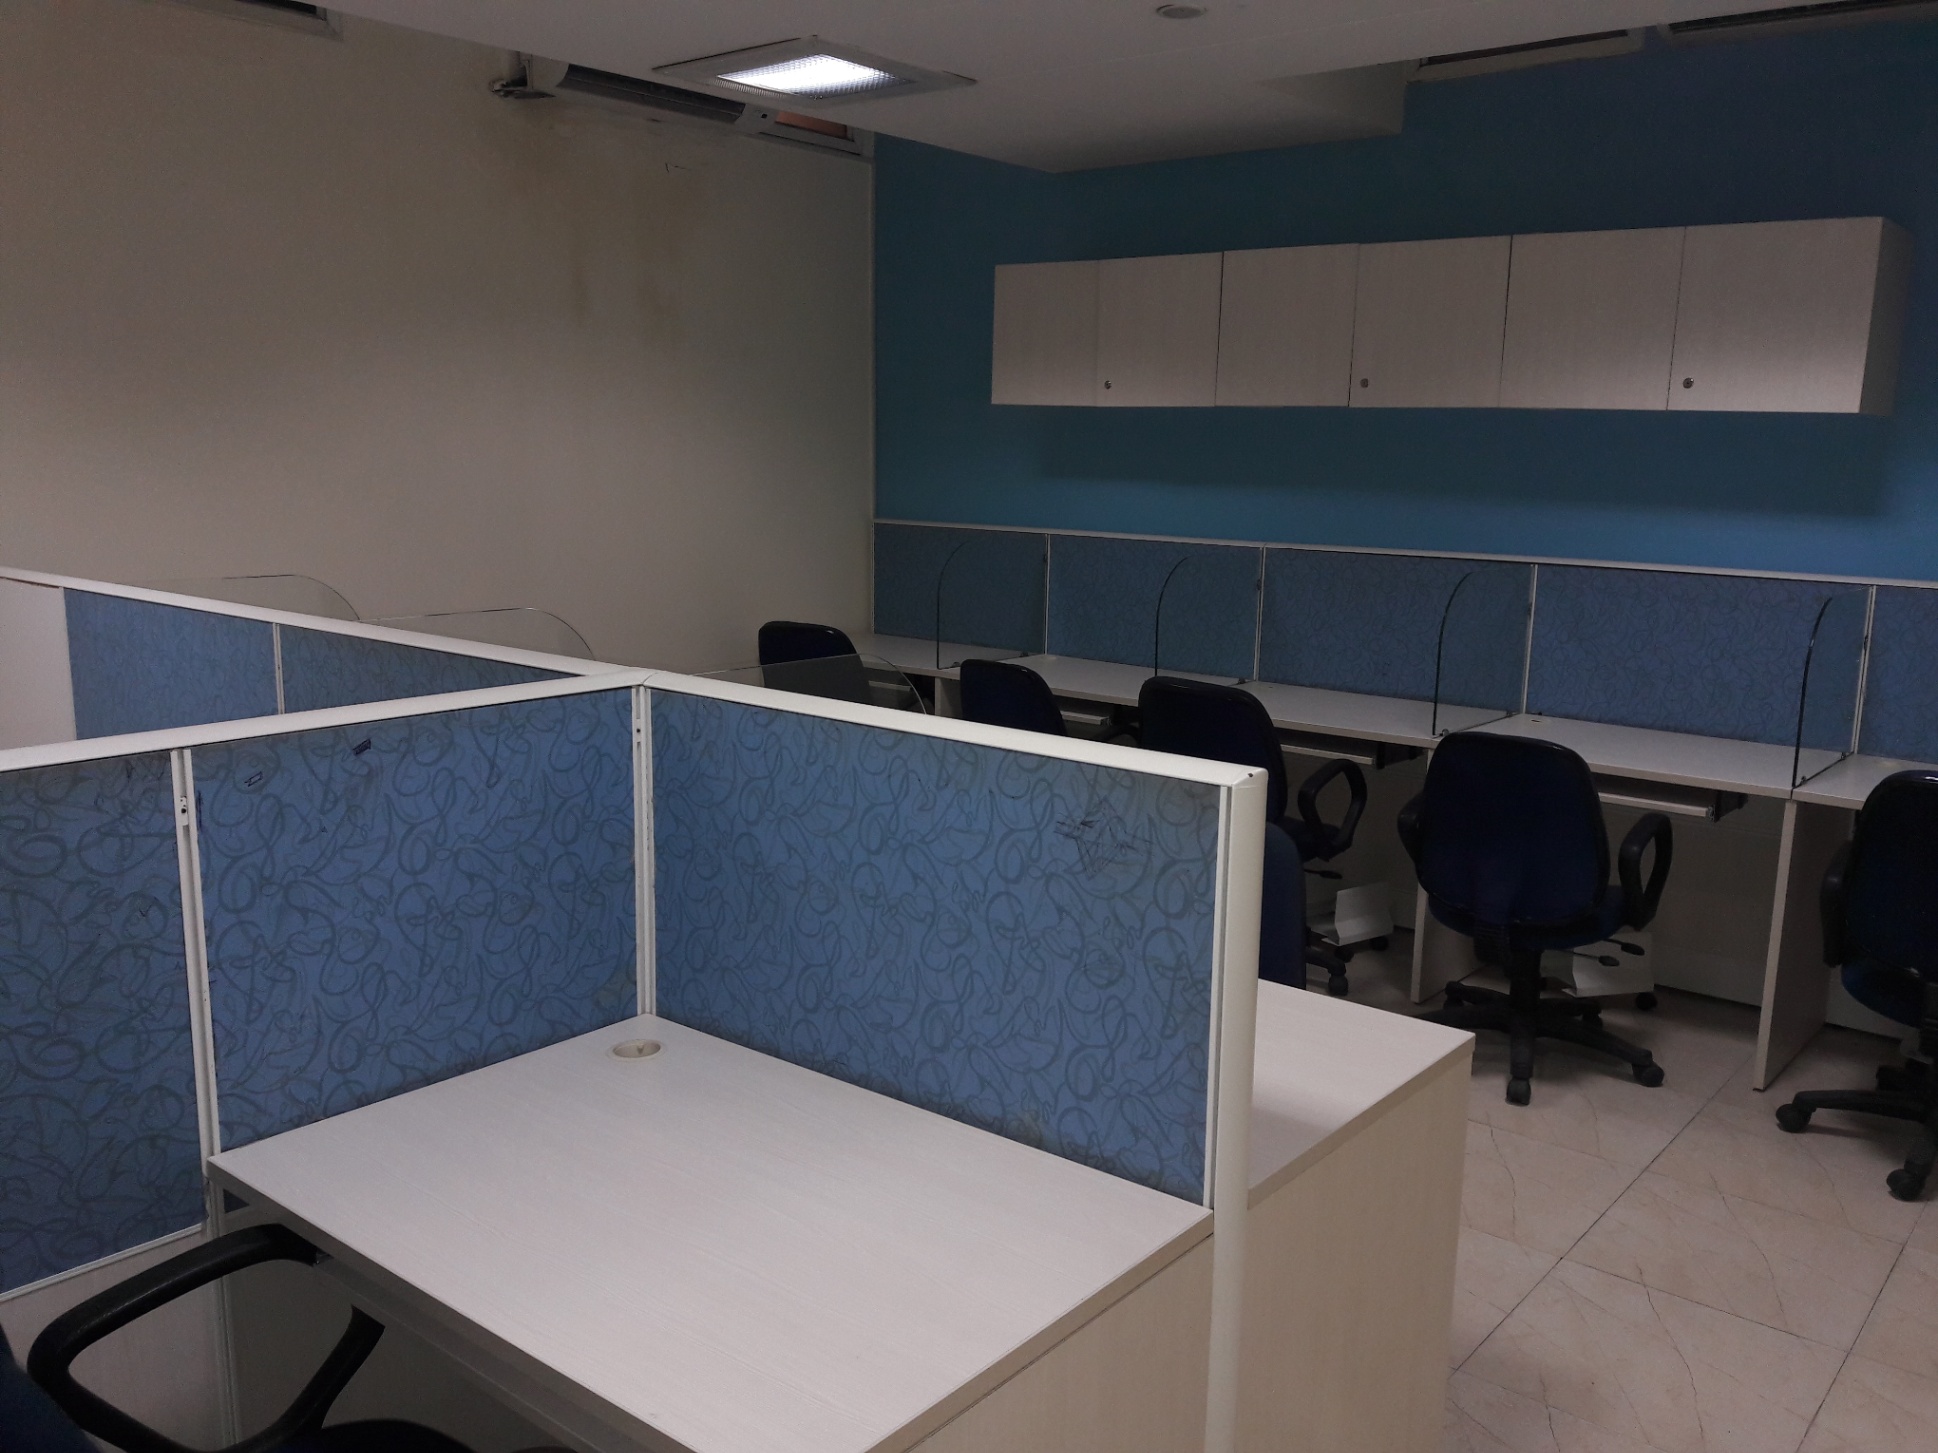 Rent Office/ Shop, 4200 sq ft carpet area, Furnished for rent @Sector 6 Noida